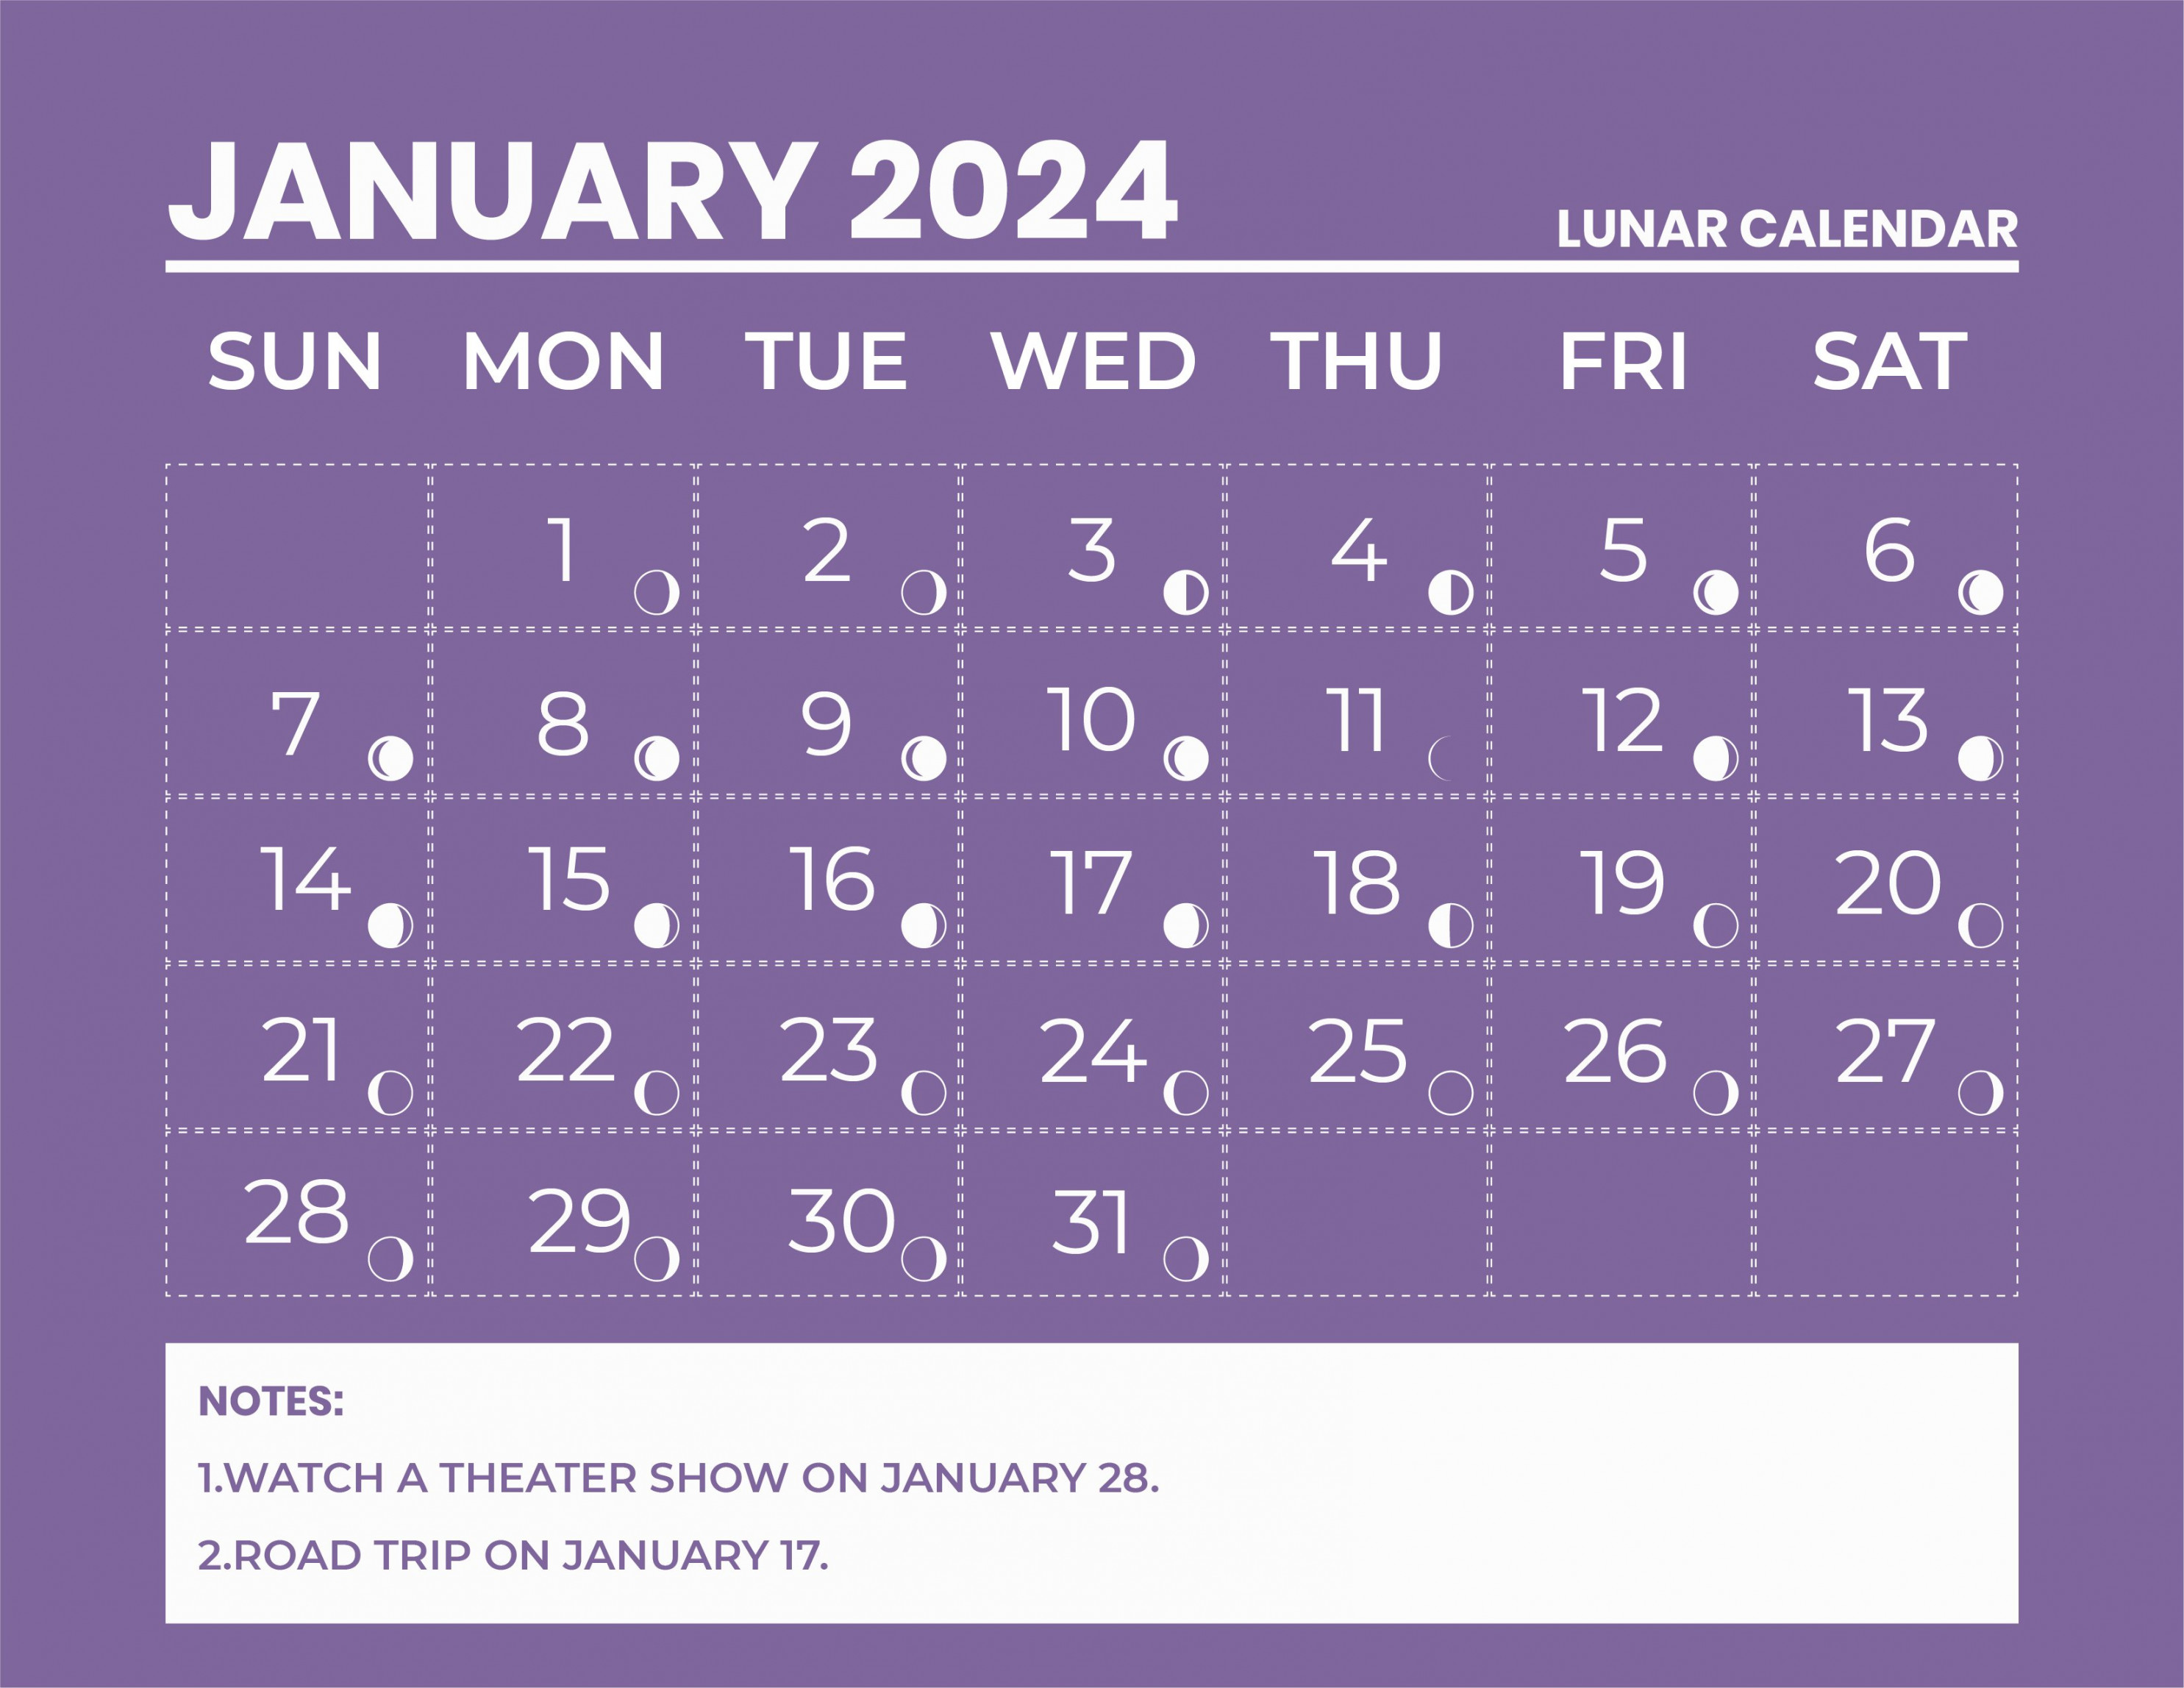 Lunar Calendar January  - Download in Word, Illustrator, EPS